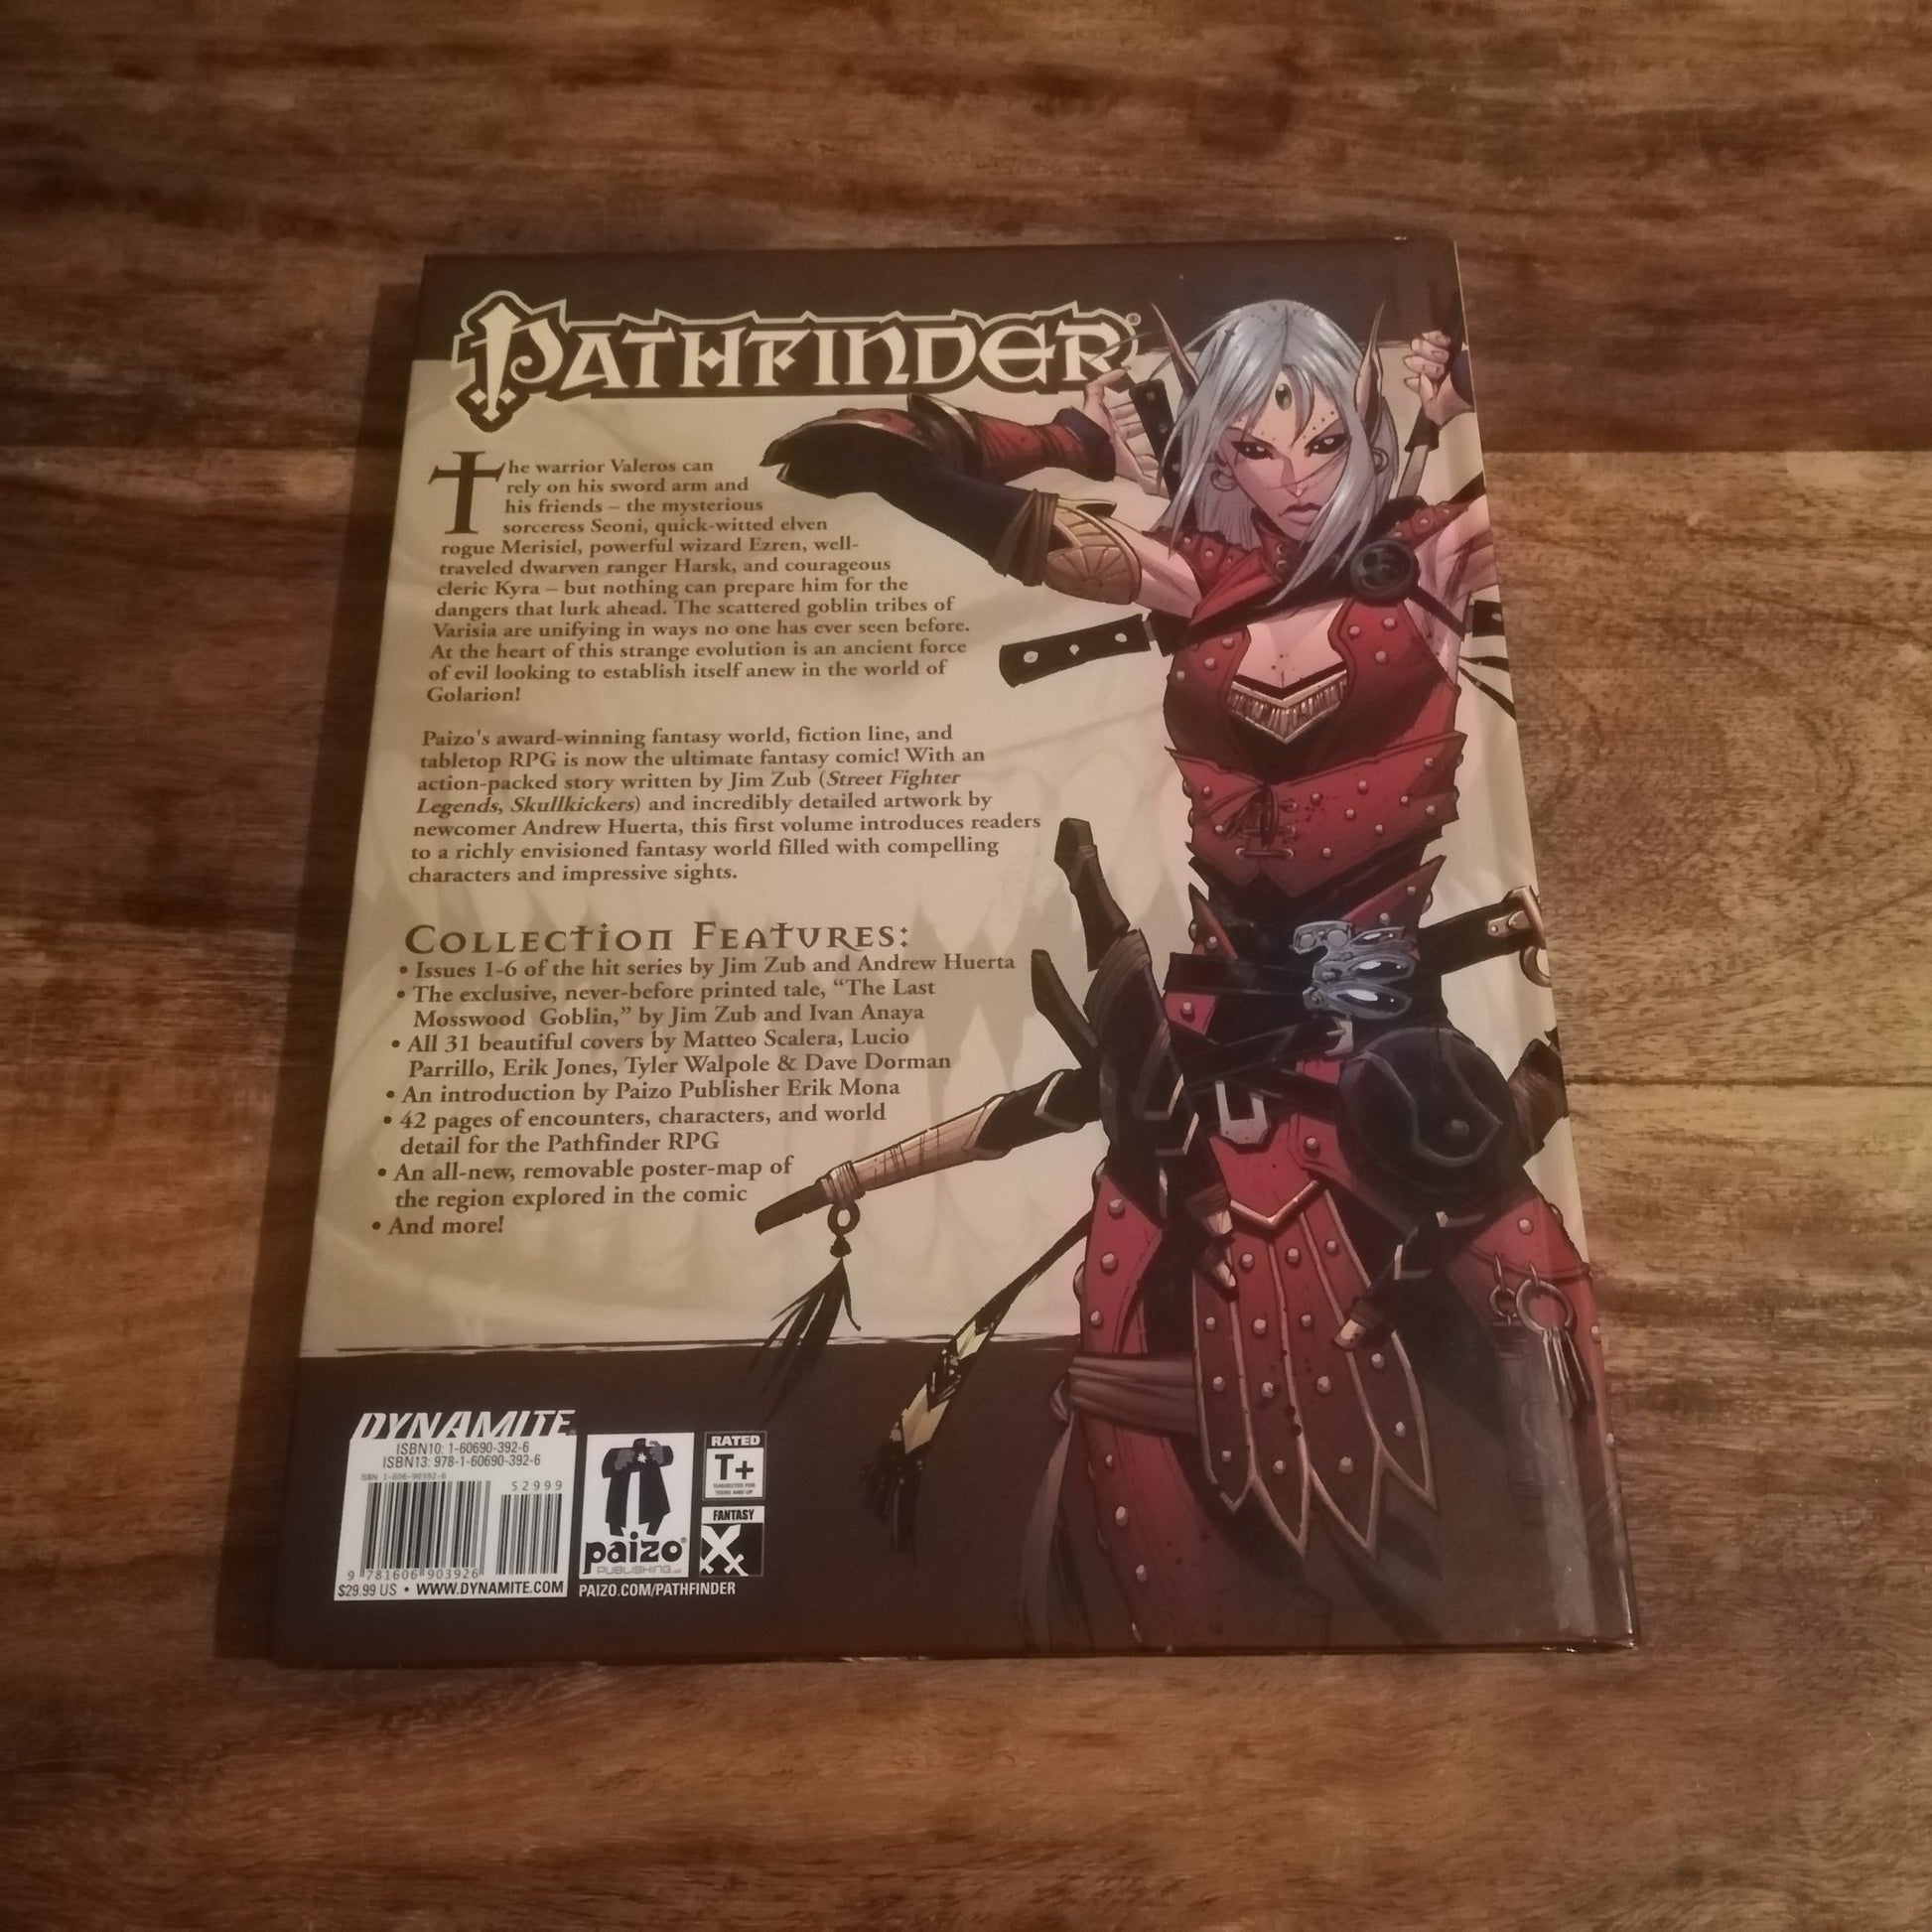 Pathfinder Dark Waters Rising Volume1: Graphic Novel Hardcover - AllRoleplaying.com